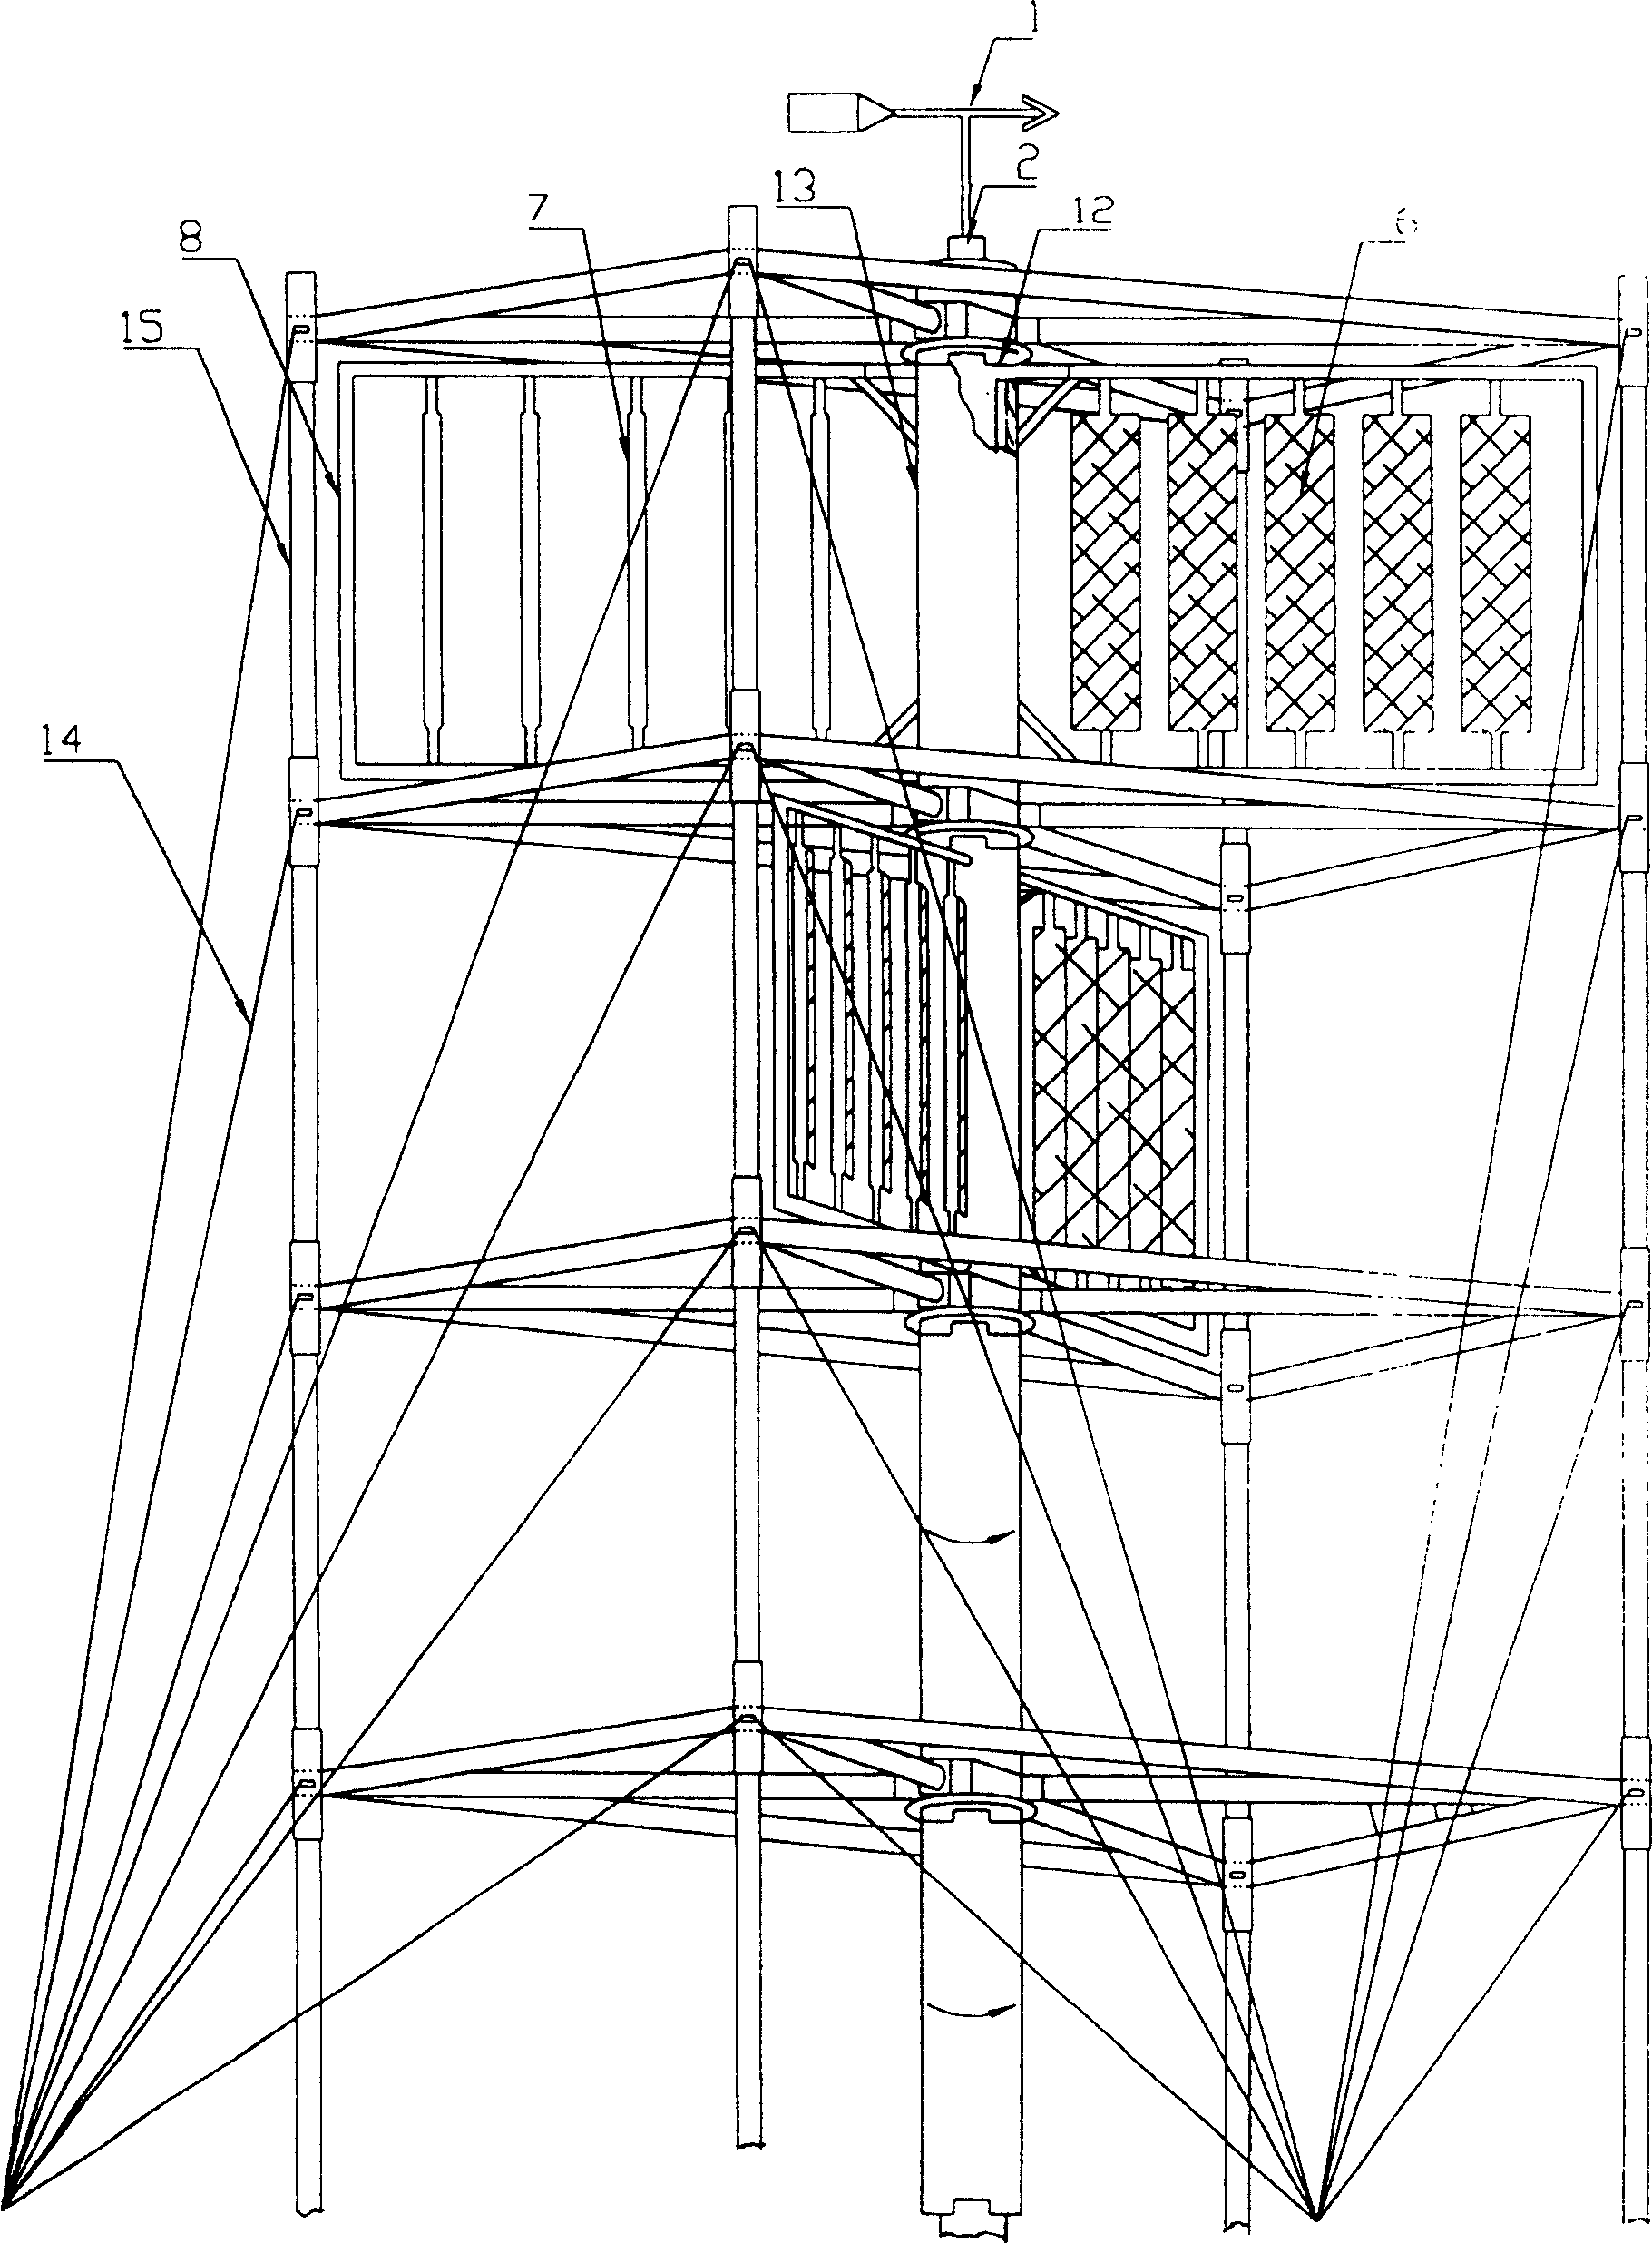 Integrated vertical shaft windmill